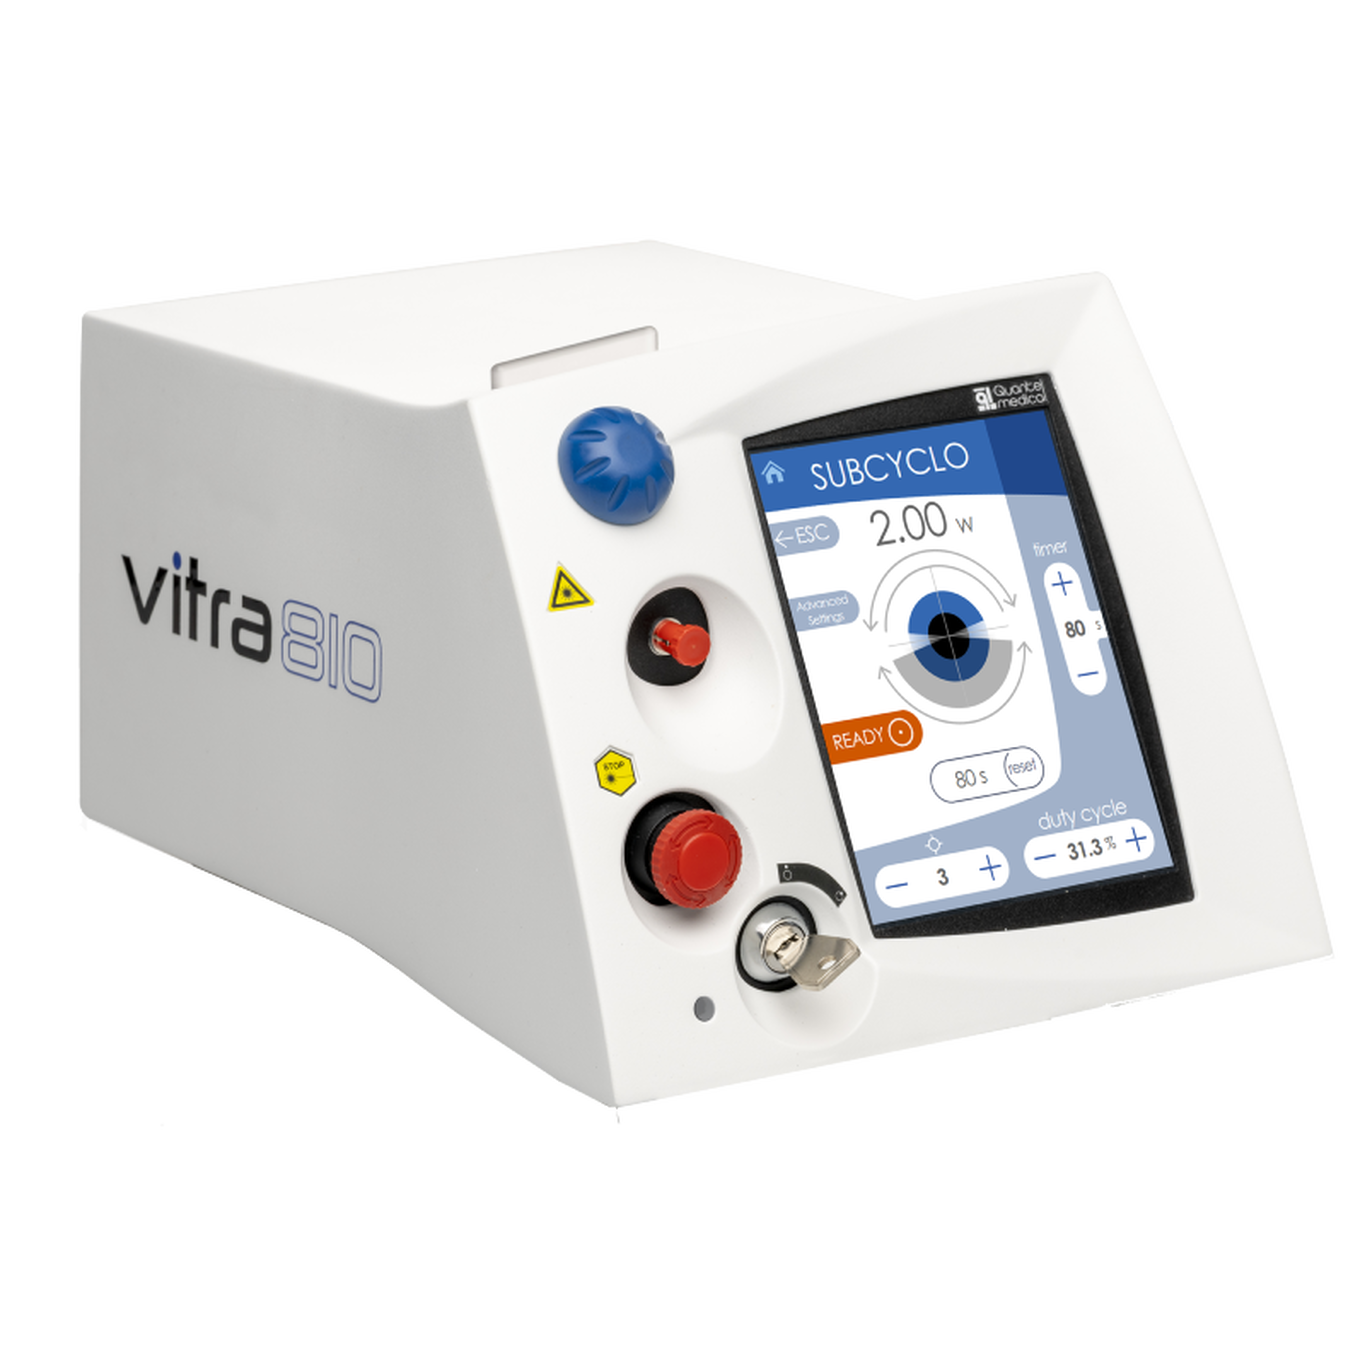 Vitra 810nm Subcyclo laser